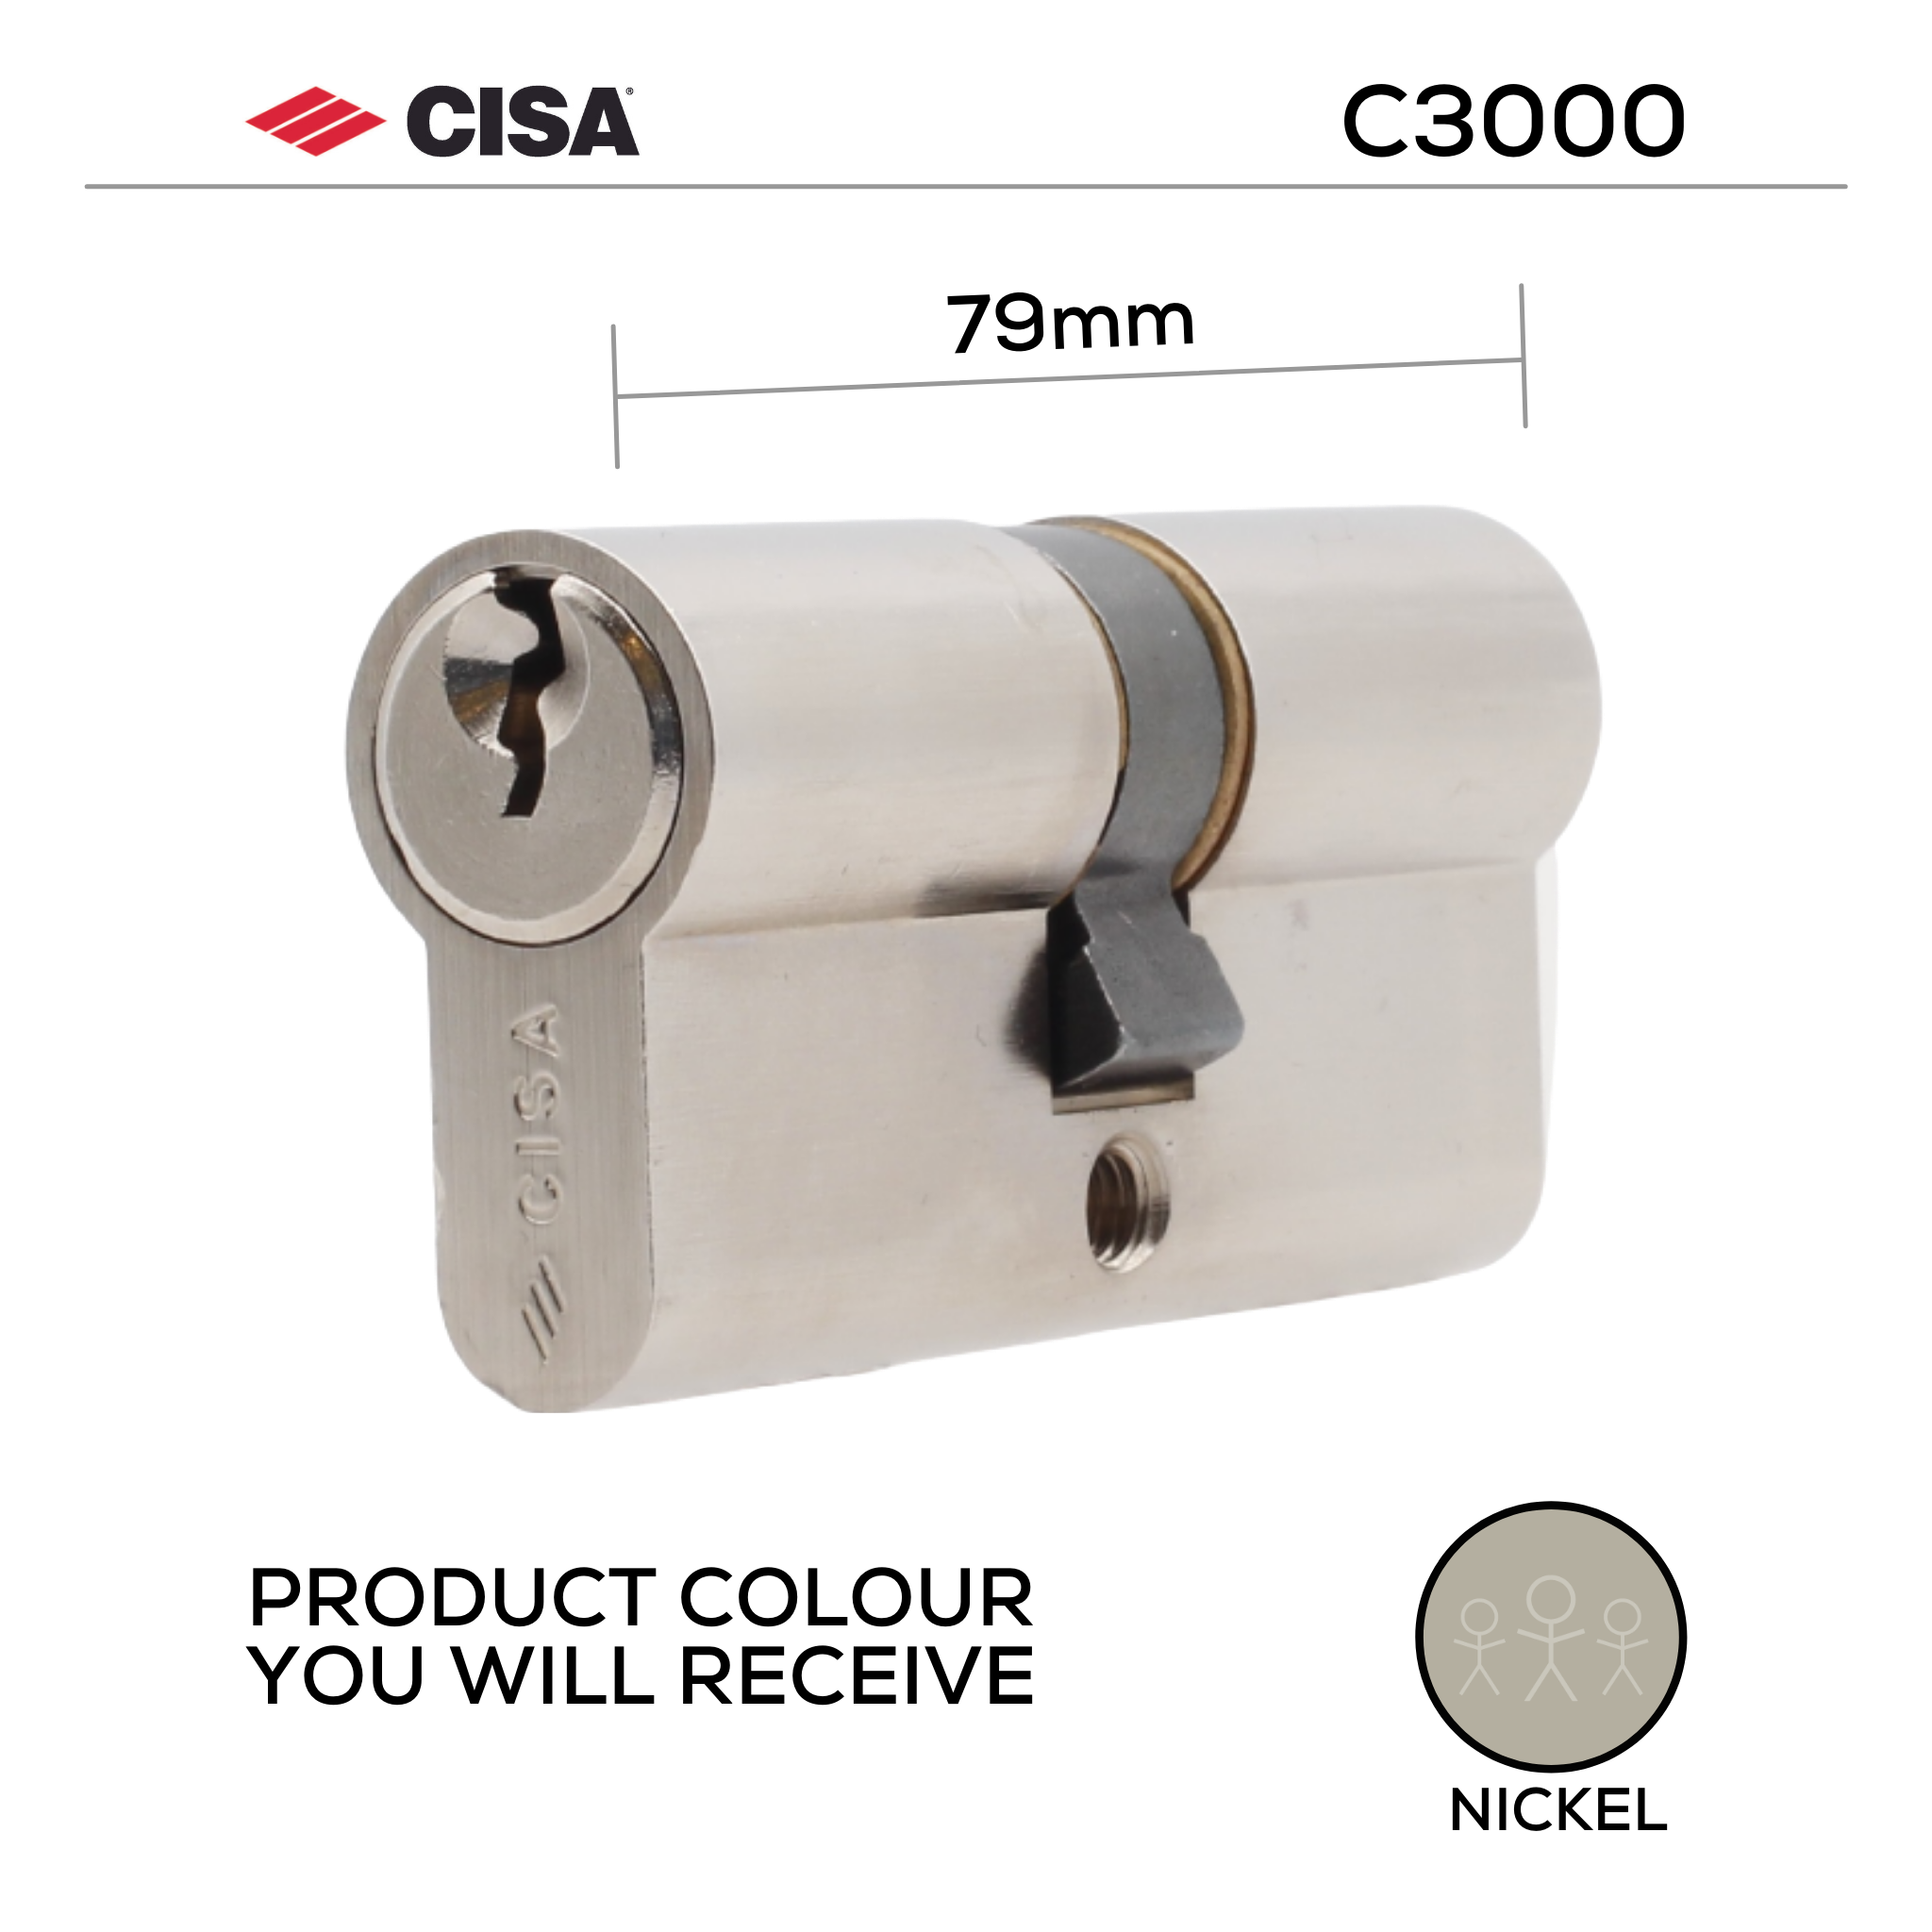 0N310-18-12-KD, 79mm - 39.5/39.5, Double Cylinder, C3000, Key to Key, Keyed to Differ (Standard), 3 Keys, 6 Pin, Nickel, CISA